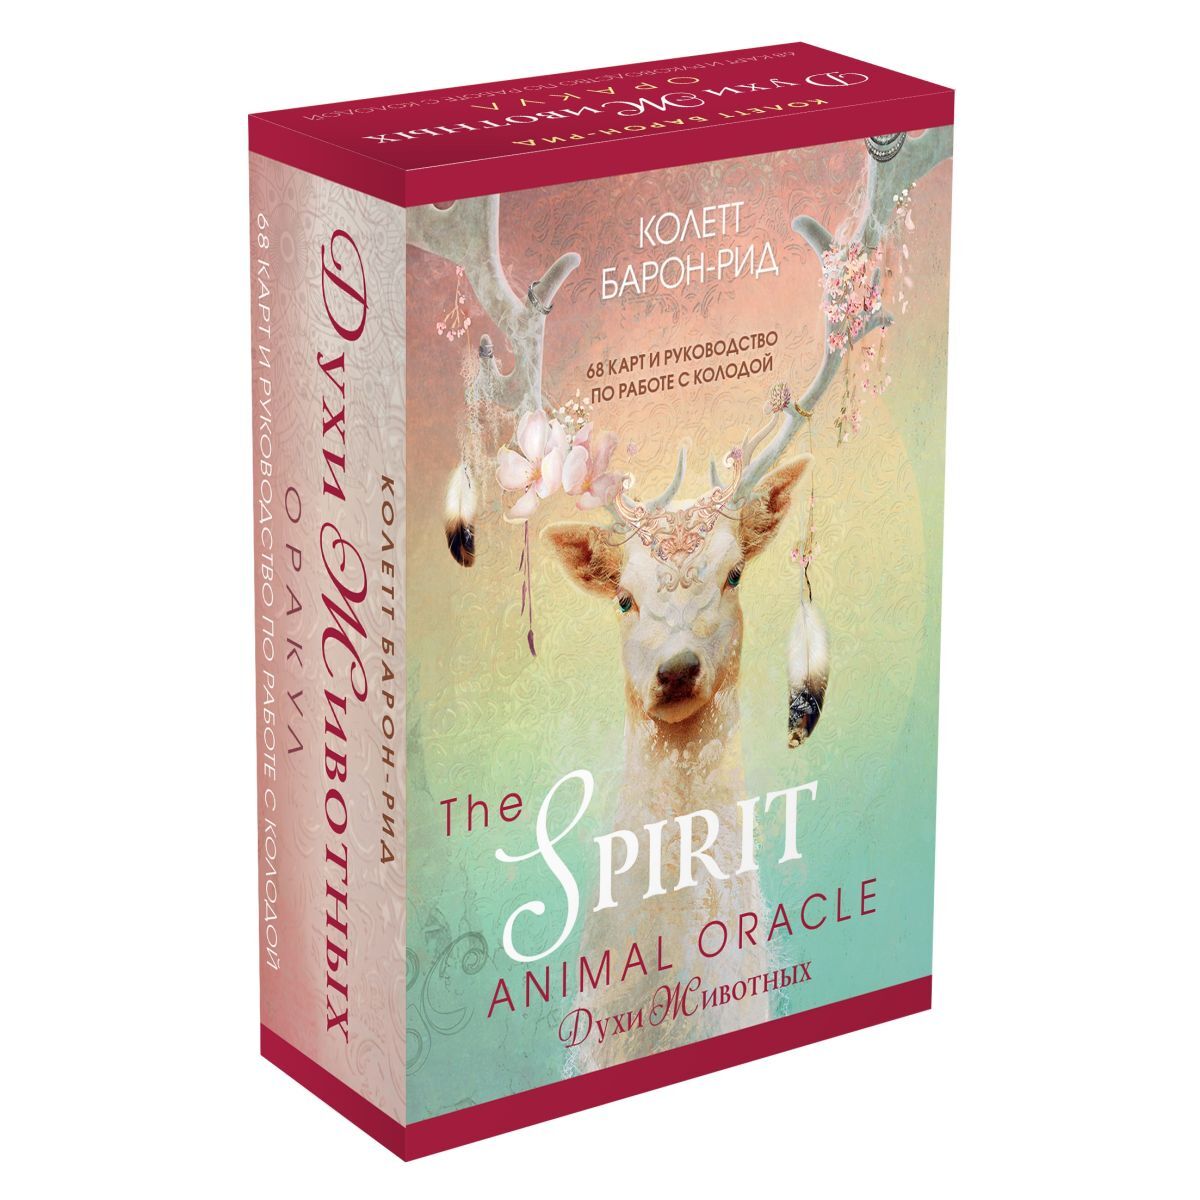 

Подарочный набор "Оракул Духи Животных" (The Spirit Animal Oracle)